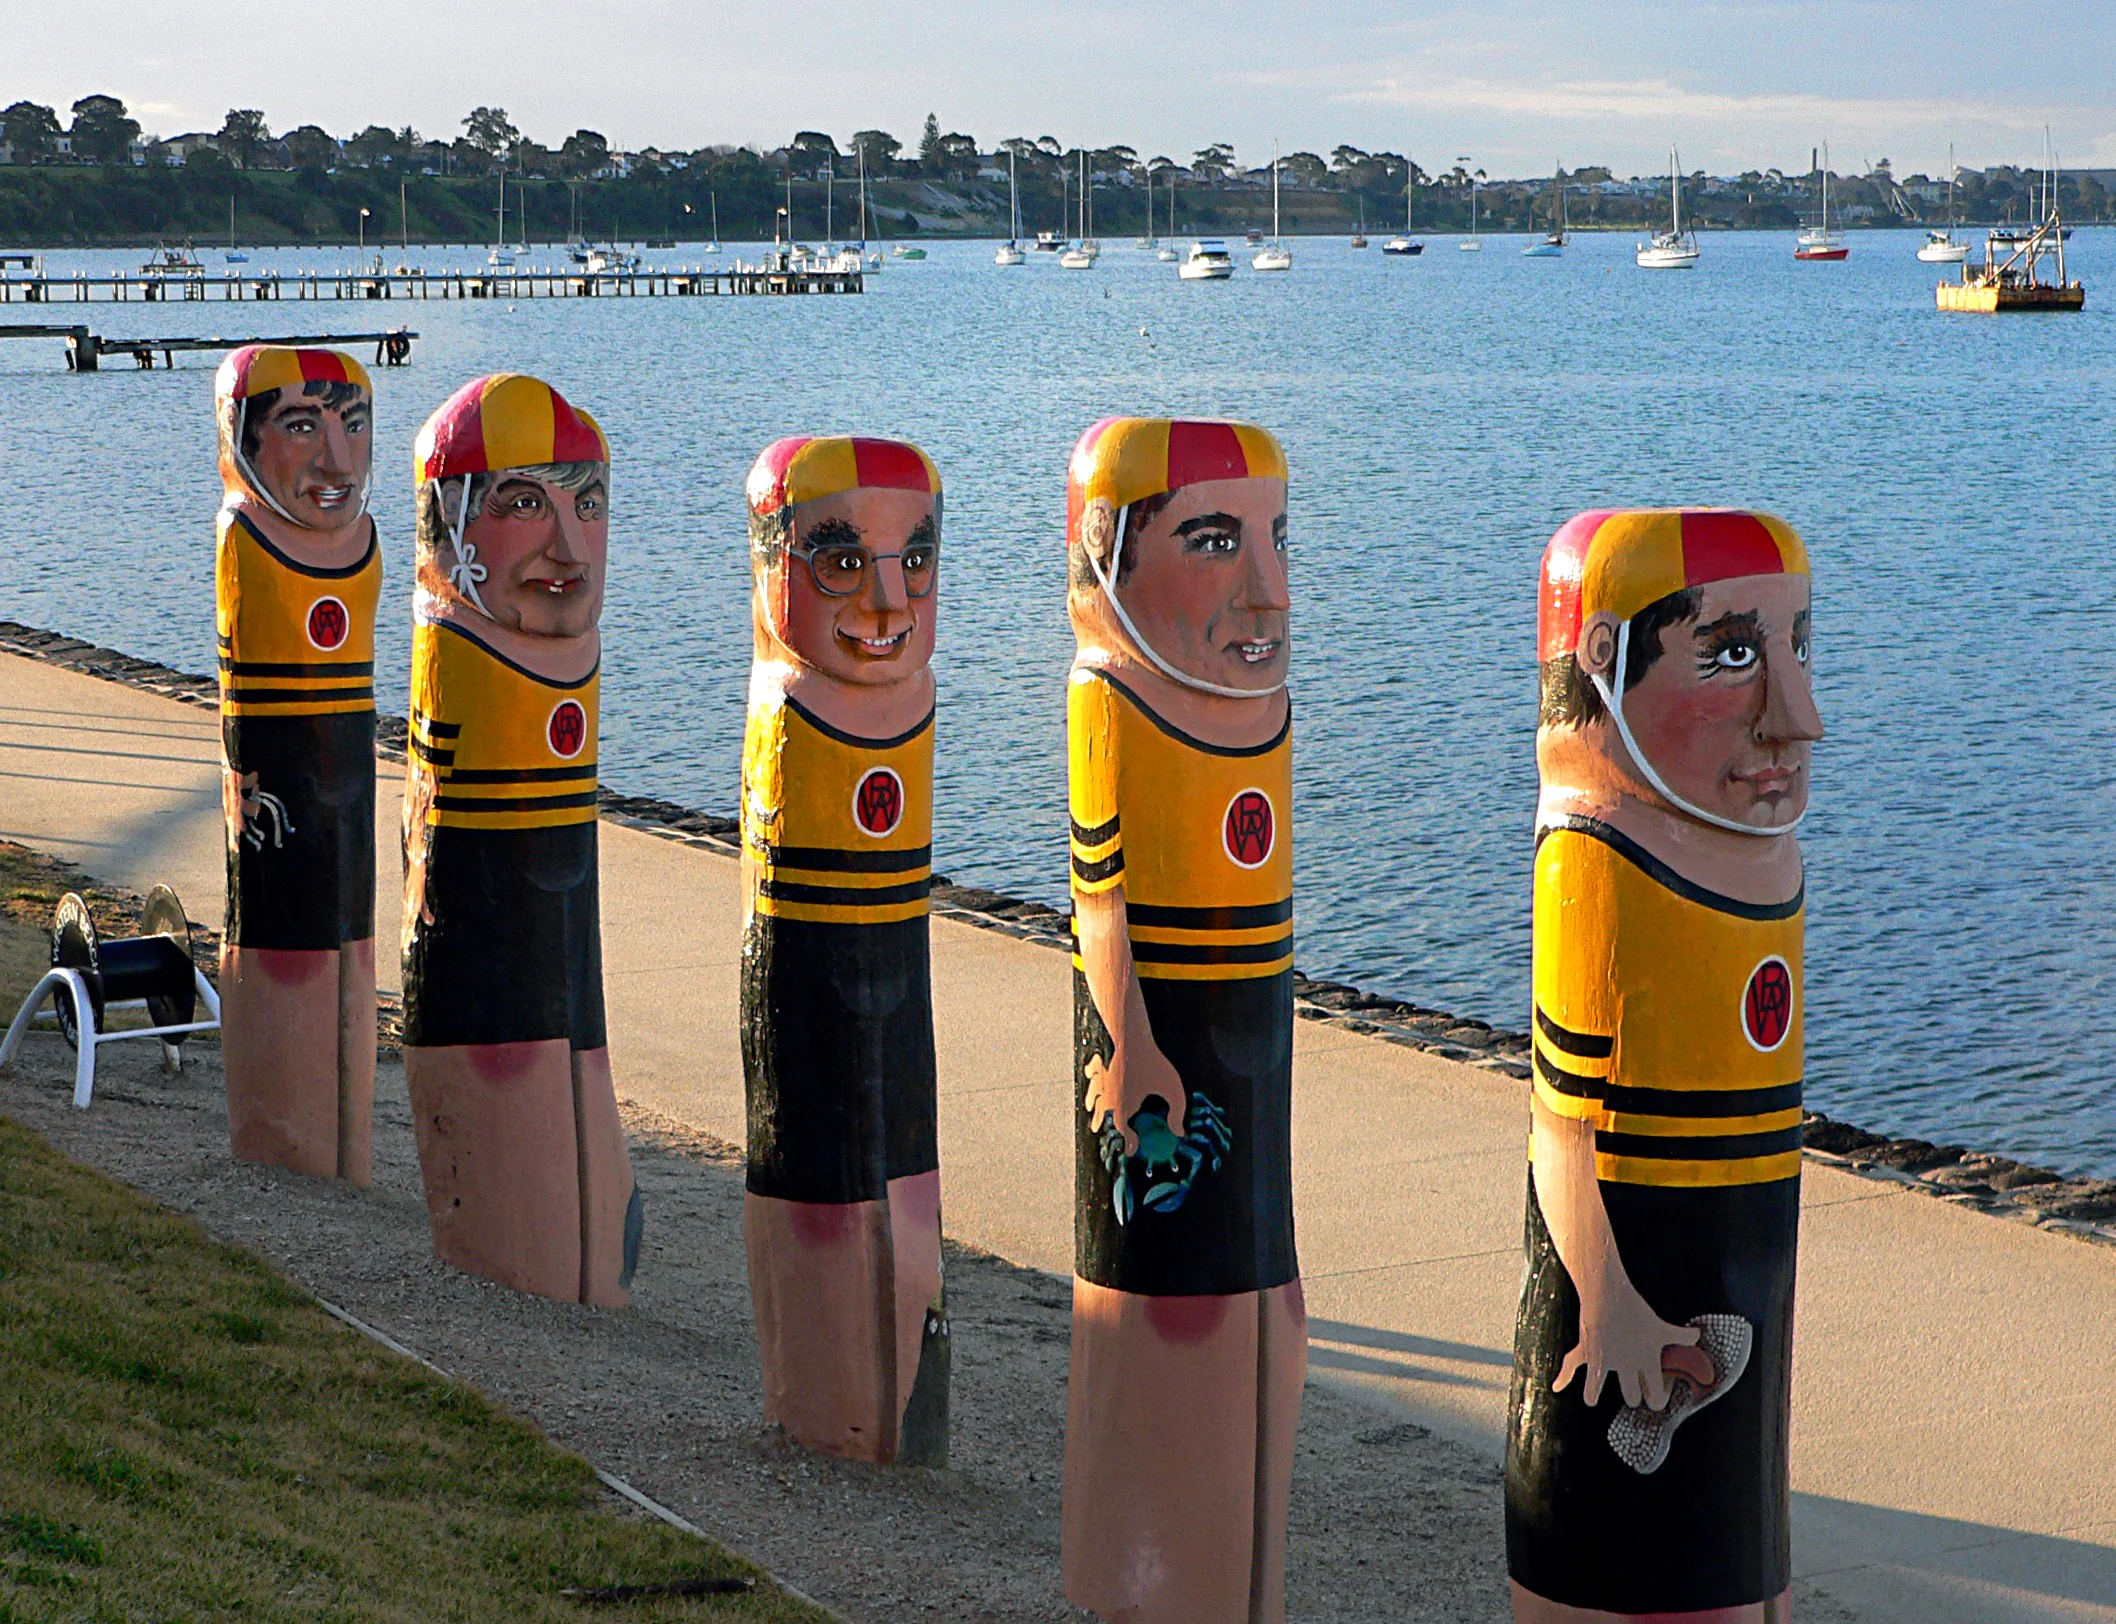 Bollards on the Geelong Bollards Trail along the Geelong Waterfront.